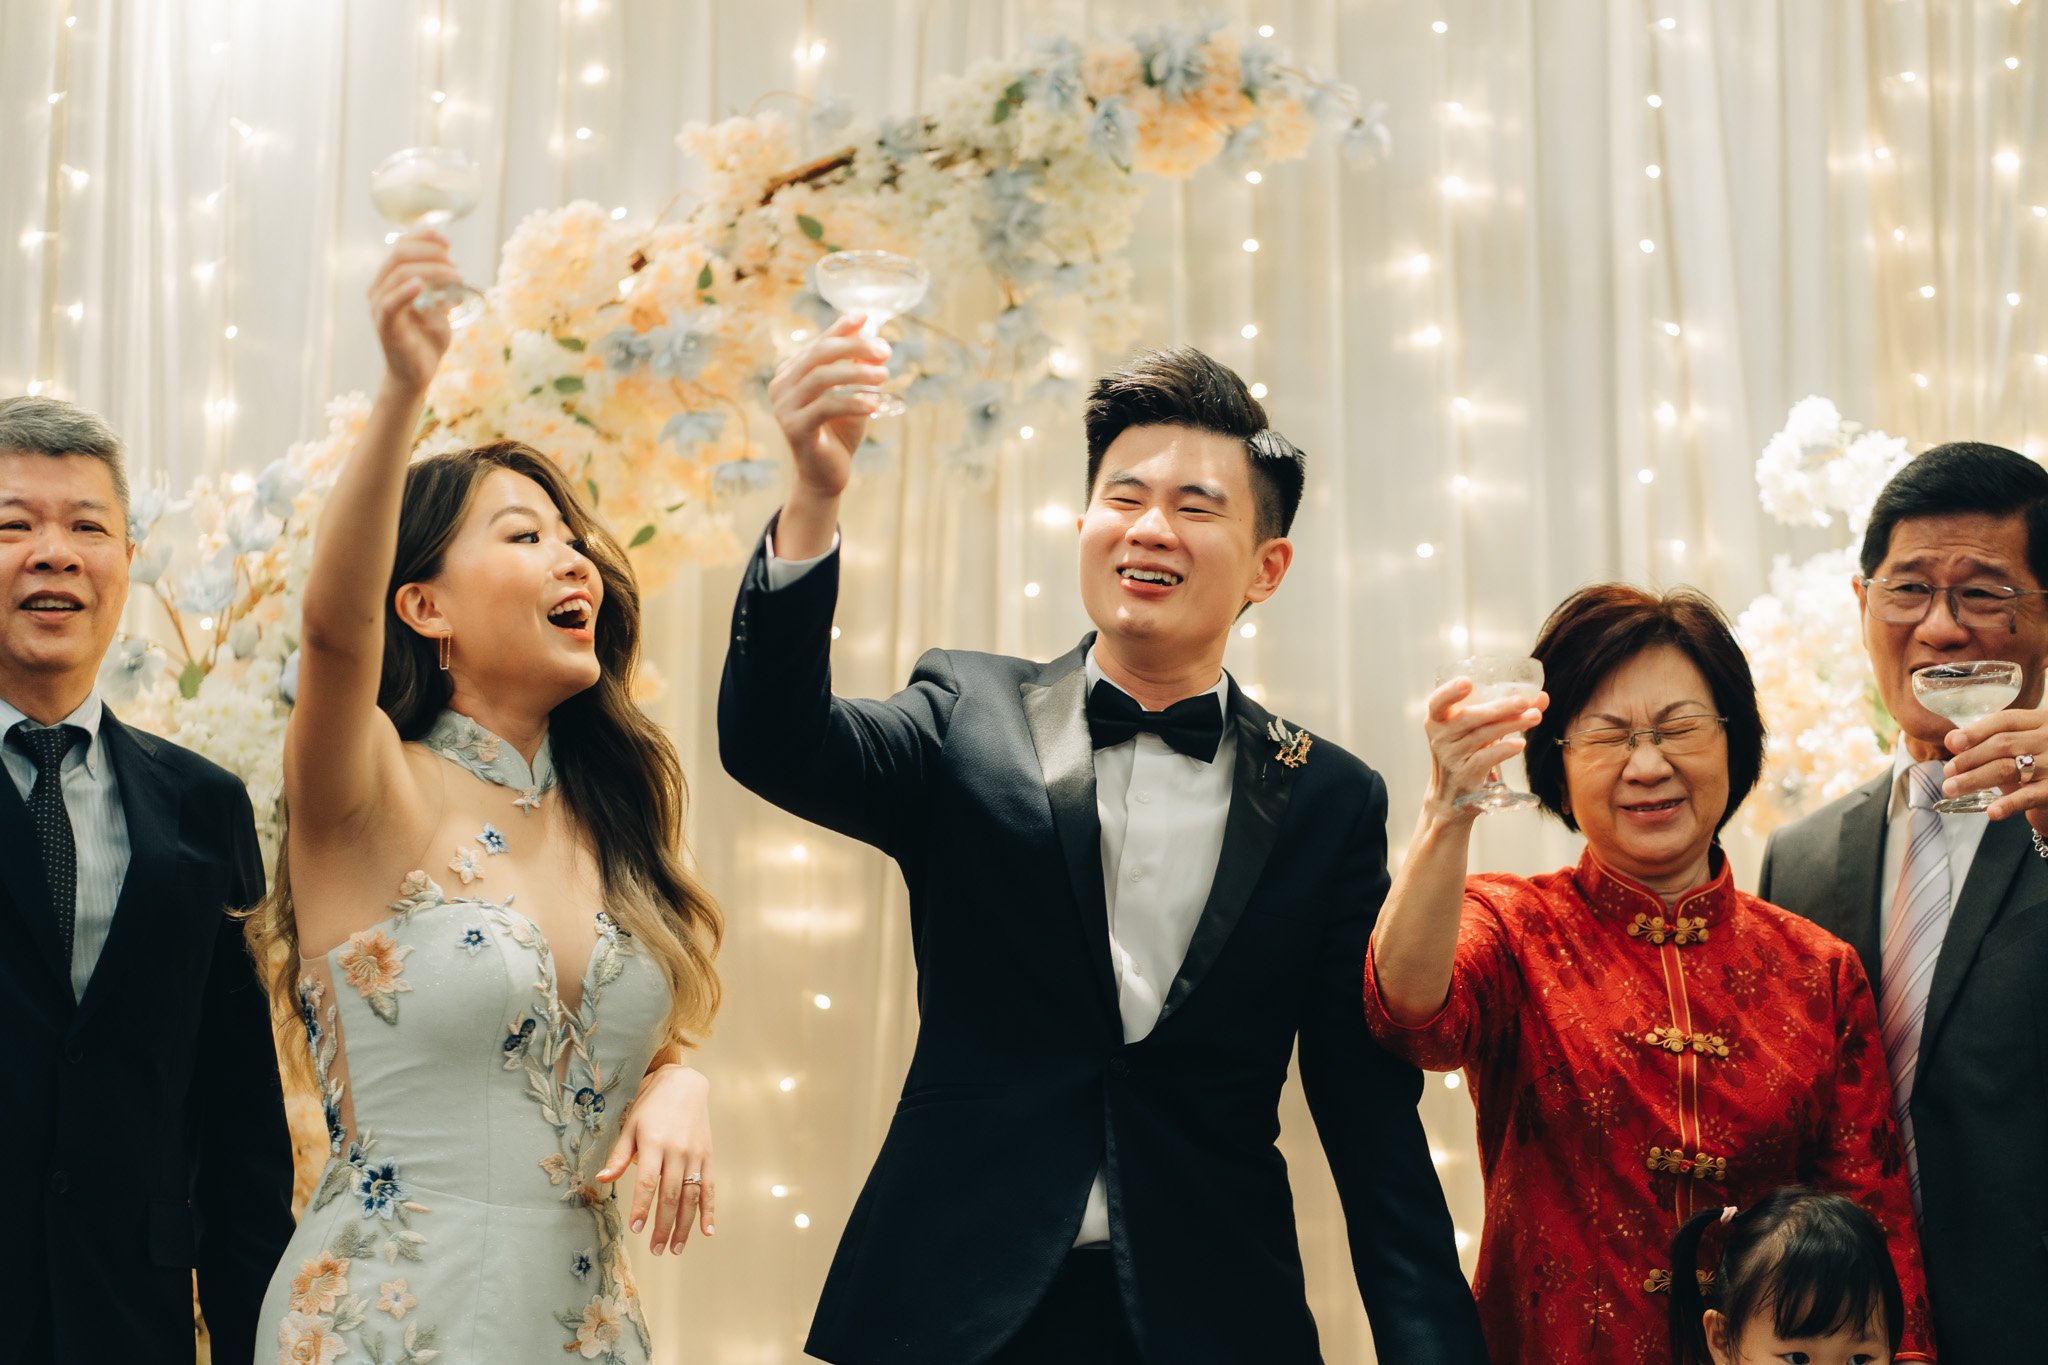 Jia Qian & Eugene wedding day highlights (resized for sharing) -219.jpg